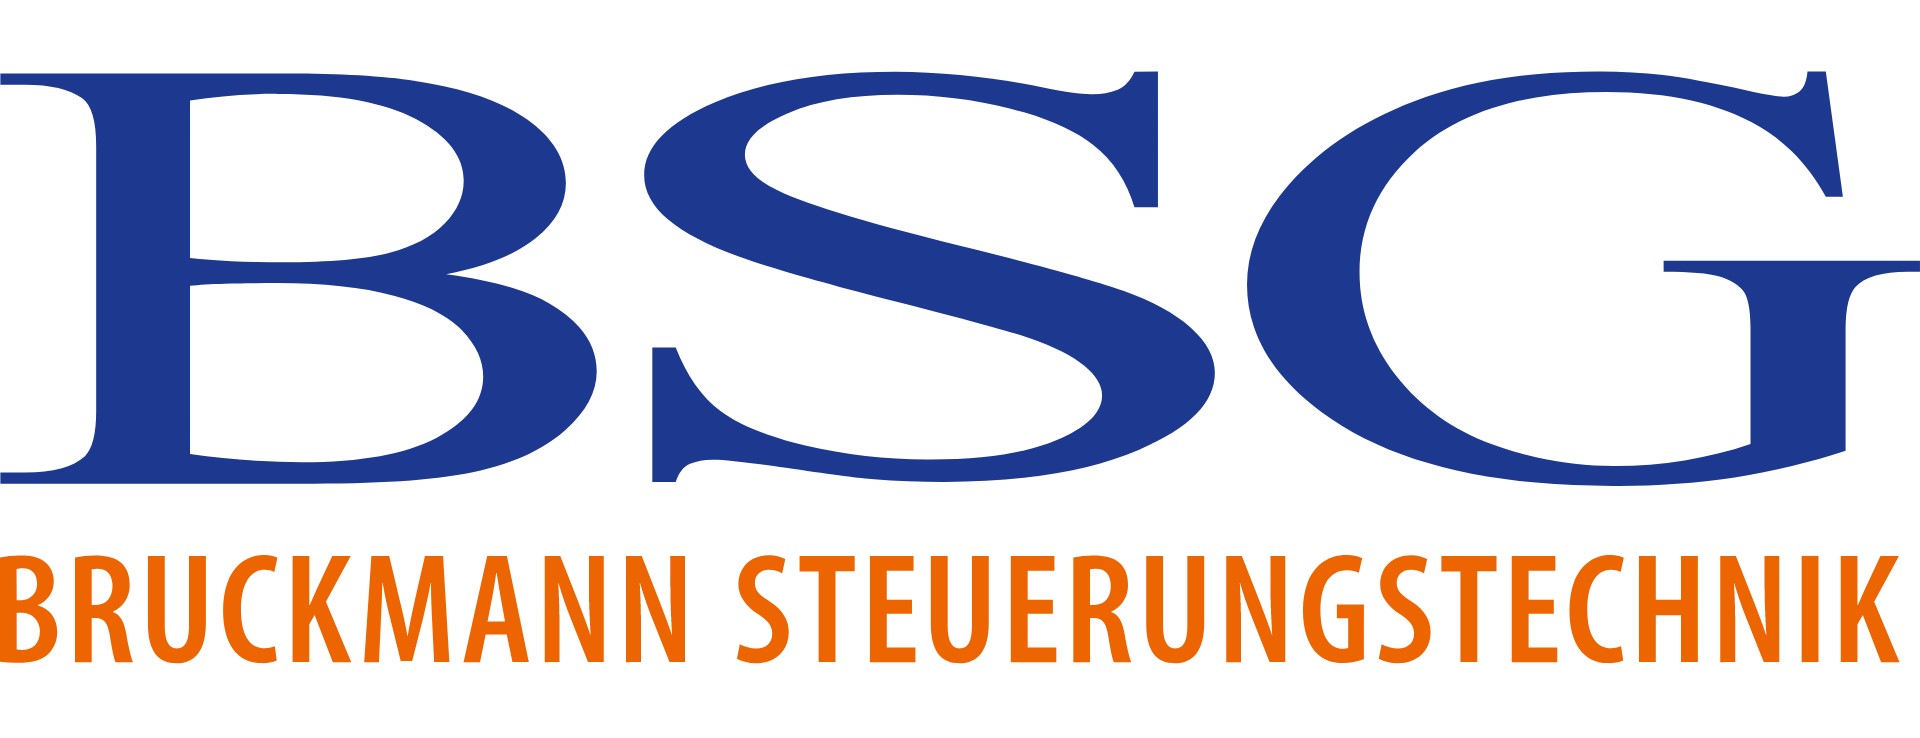 bsg logo